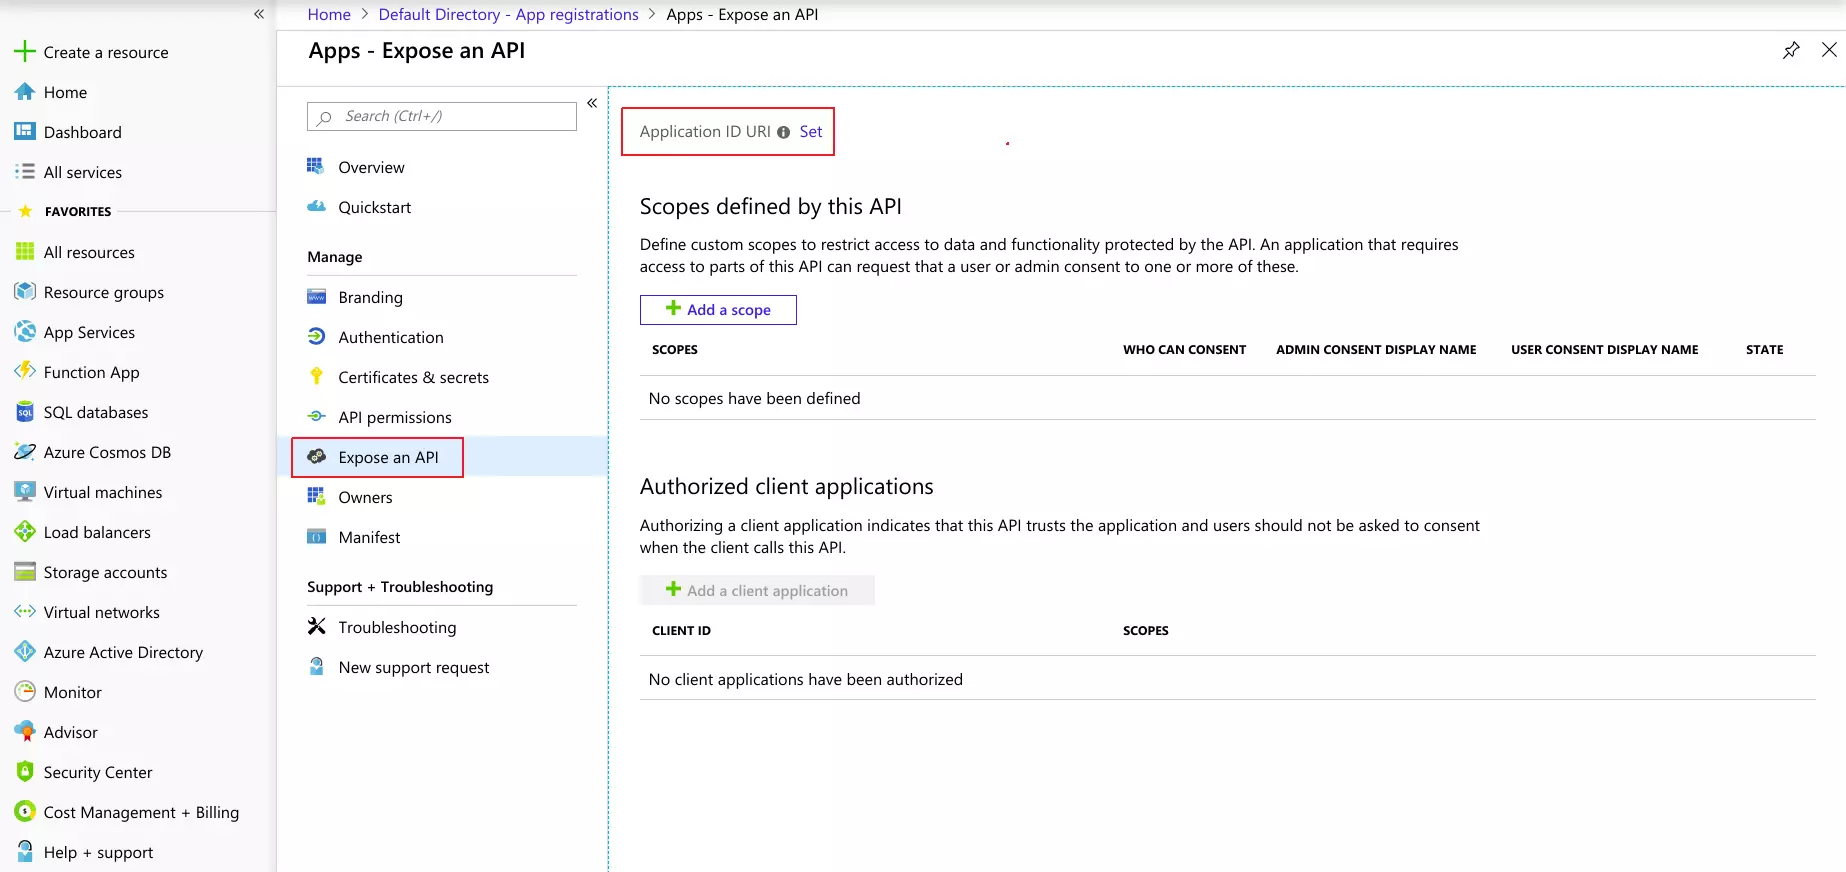 ASP.NET Core SAML Single Sign-On (SSO) using Azure AD as IDP -  Expose an API)